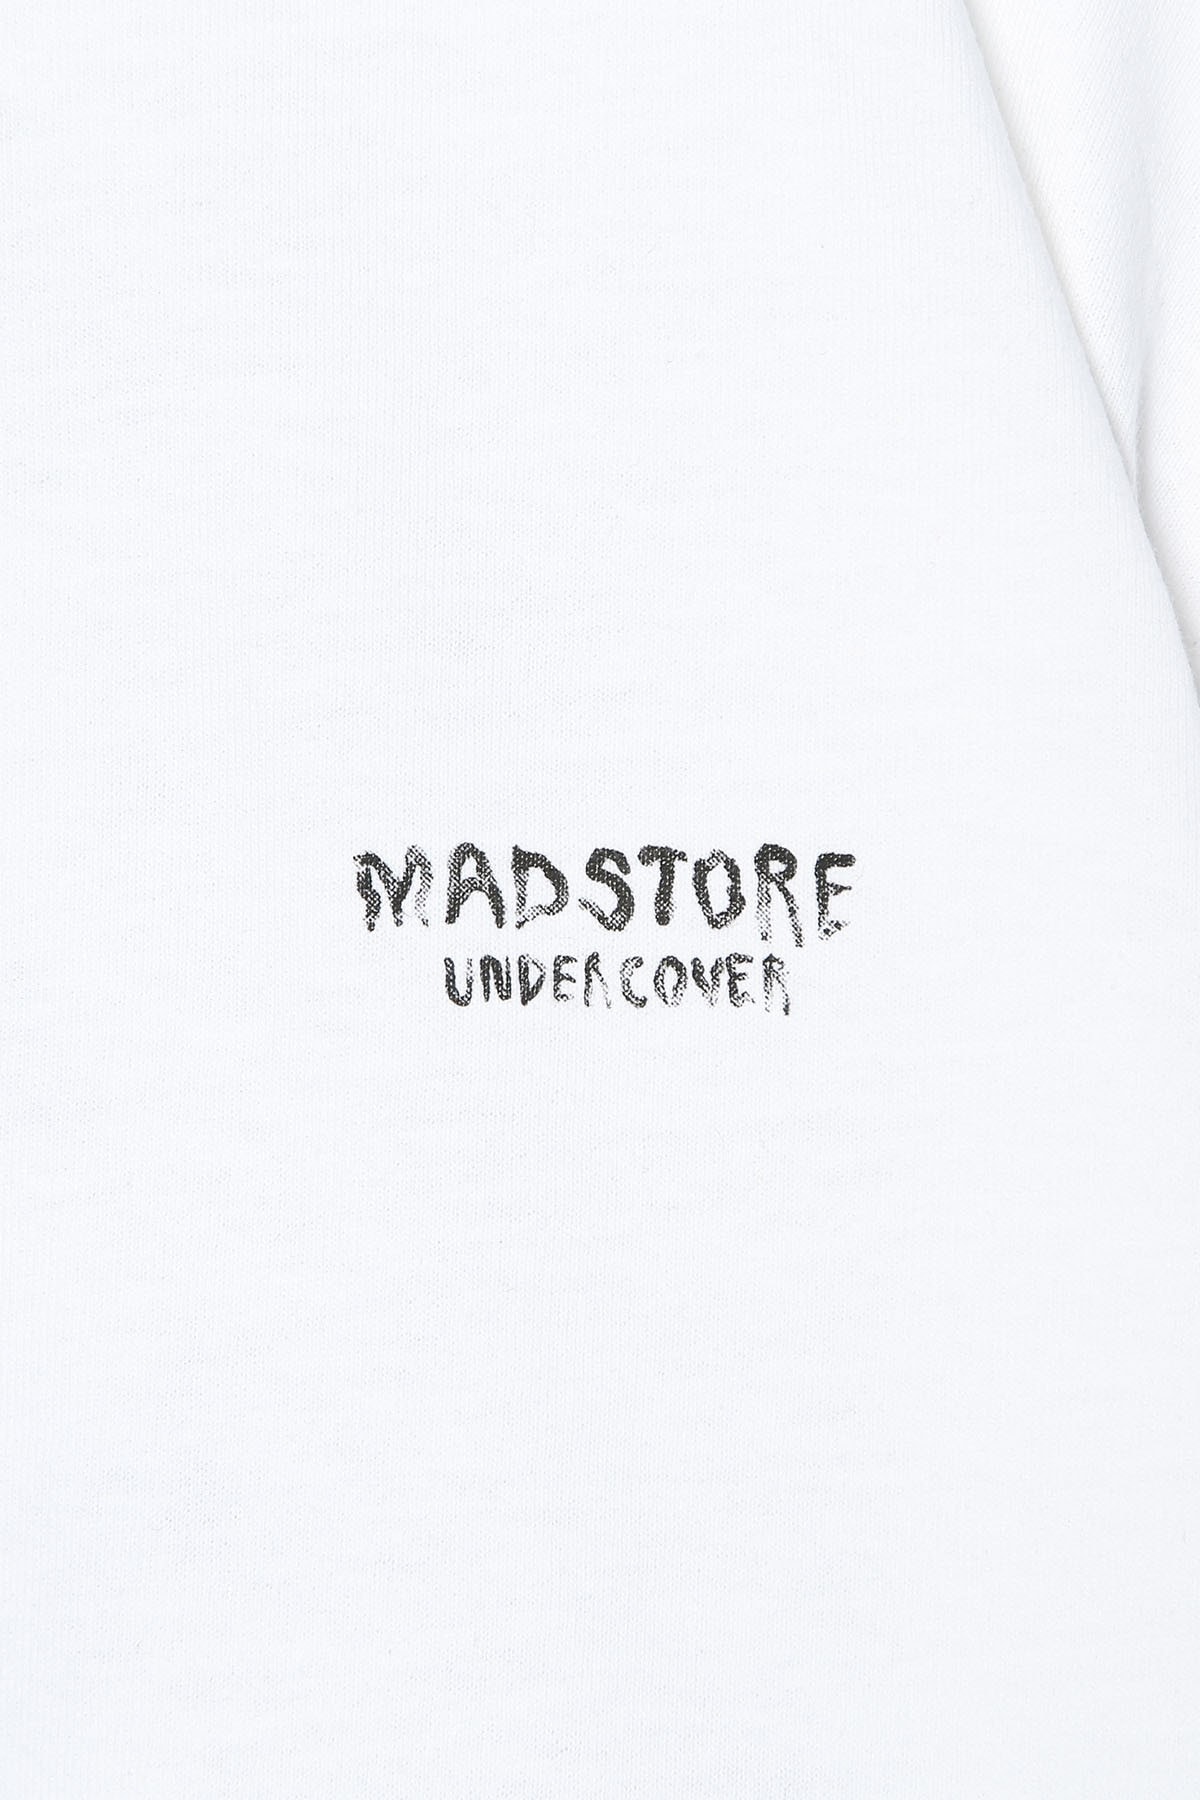 MADSTORE UNDERCOVER 攜手藝術家 UC EAST 推出全新聯名系列